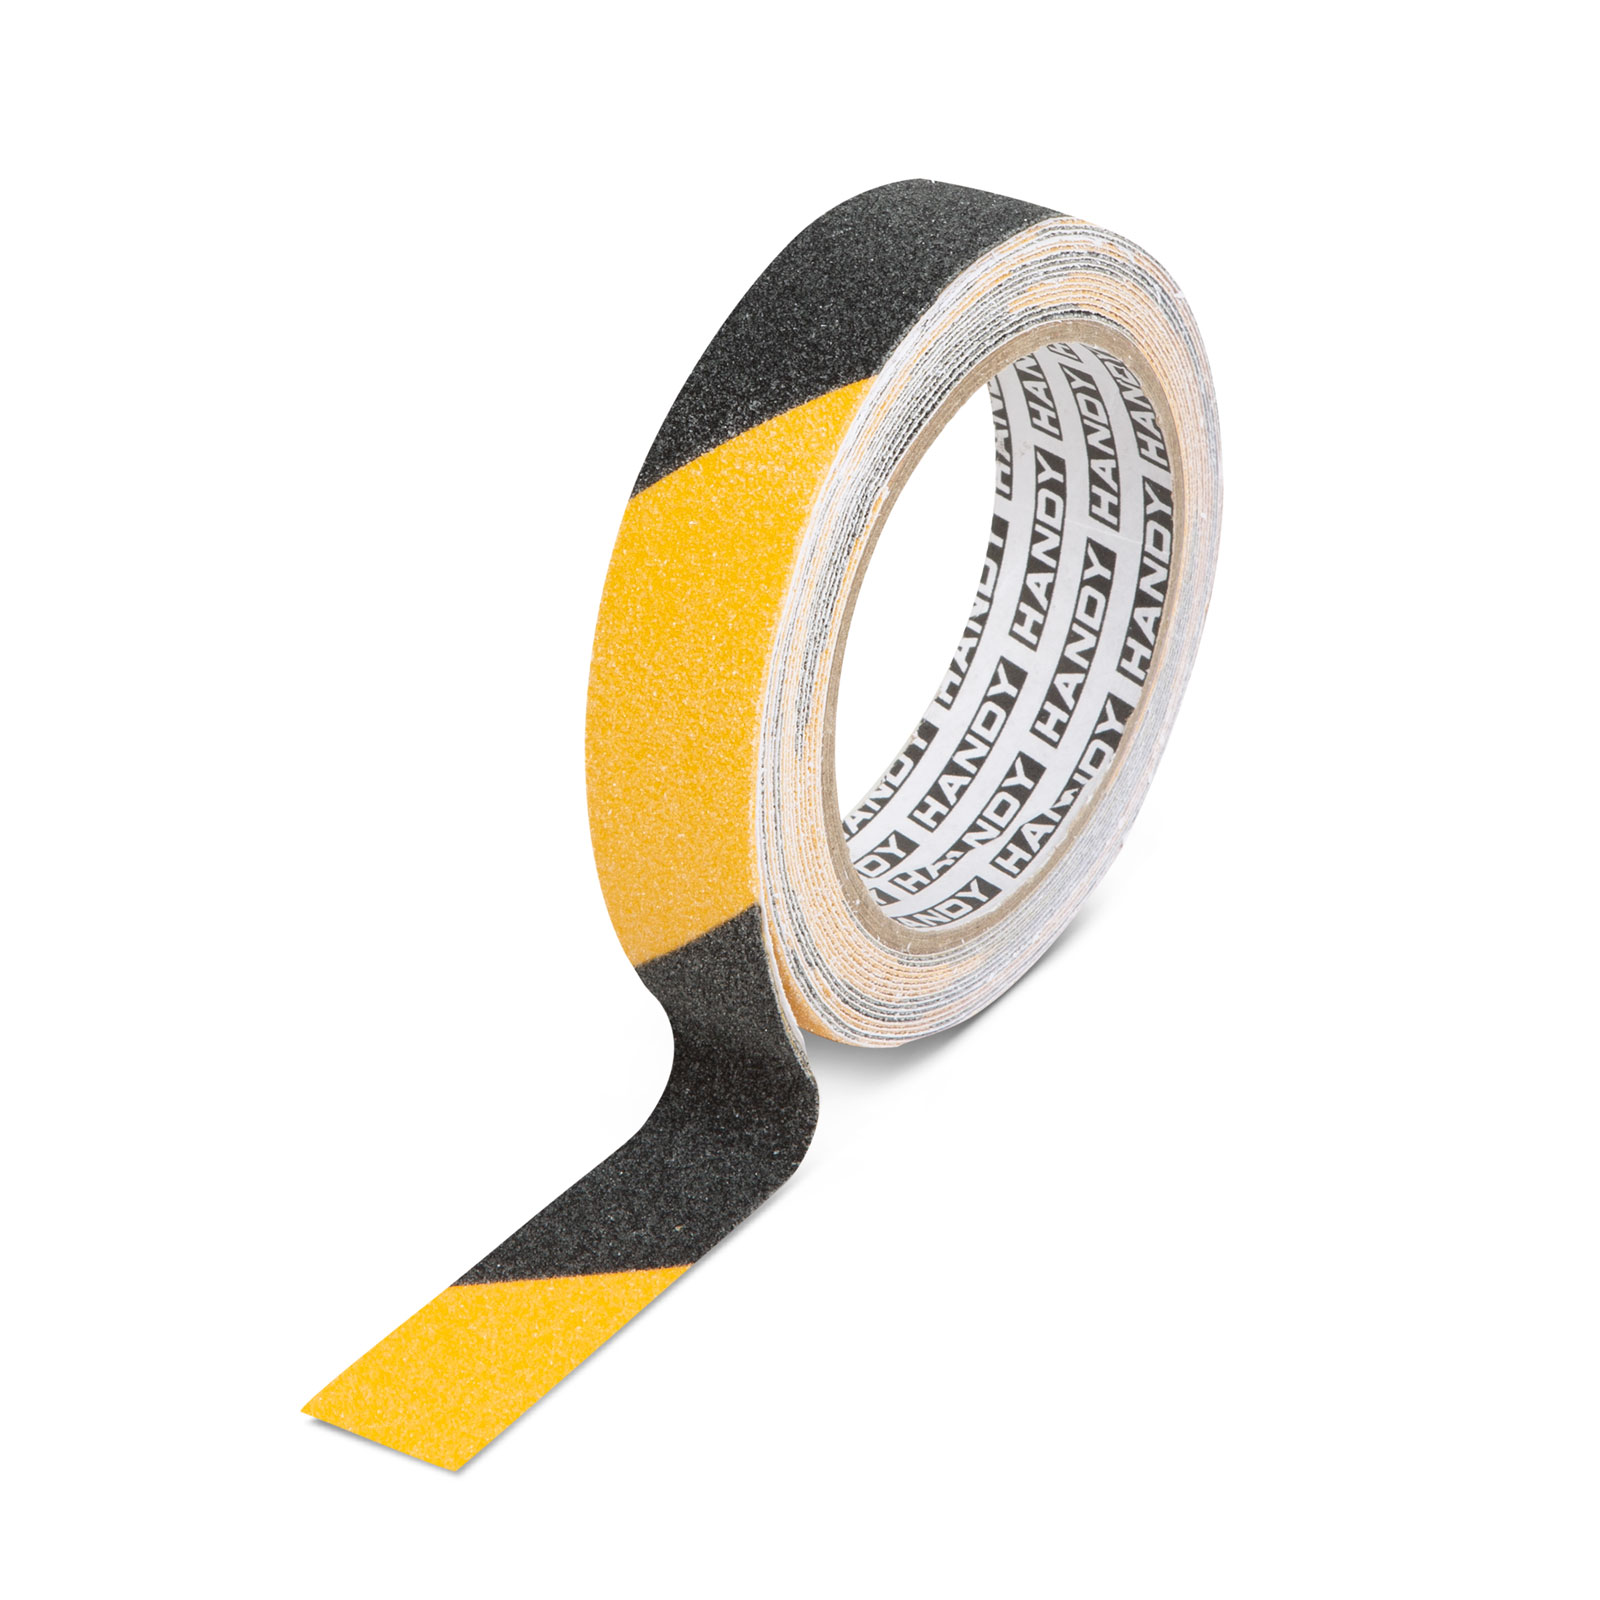 Adhesive tape - non-slip - 5 m x 25 mm - yellow / black thumb